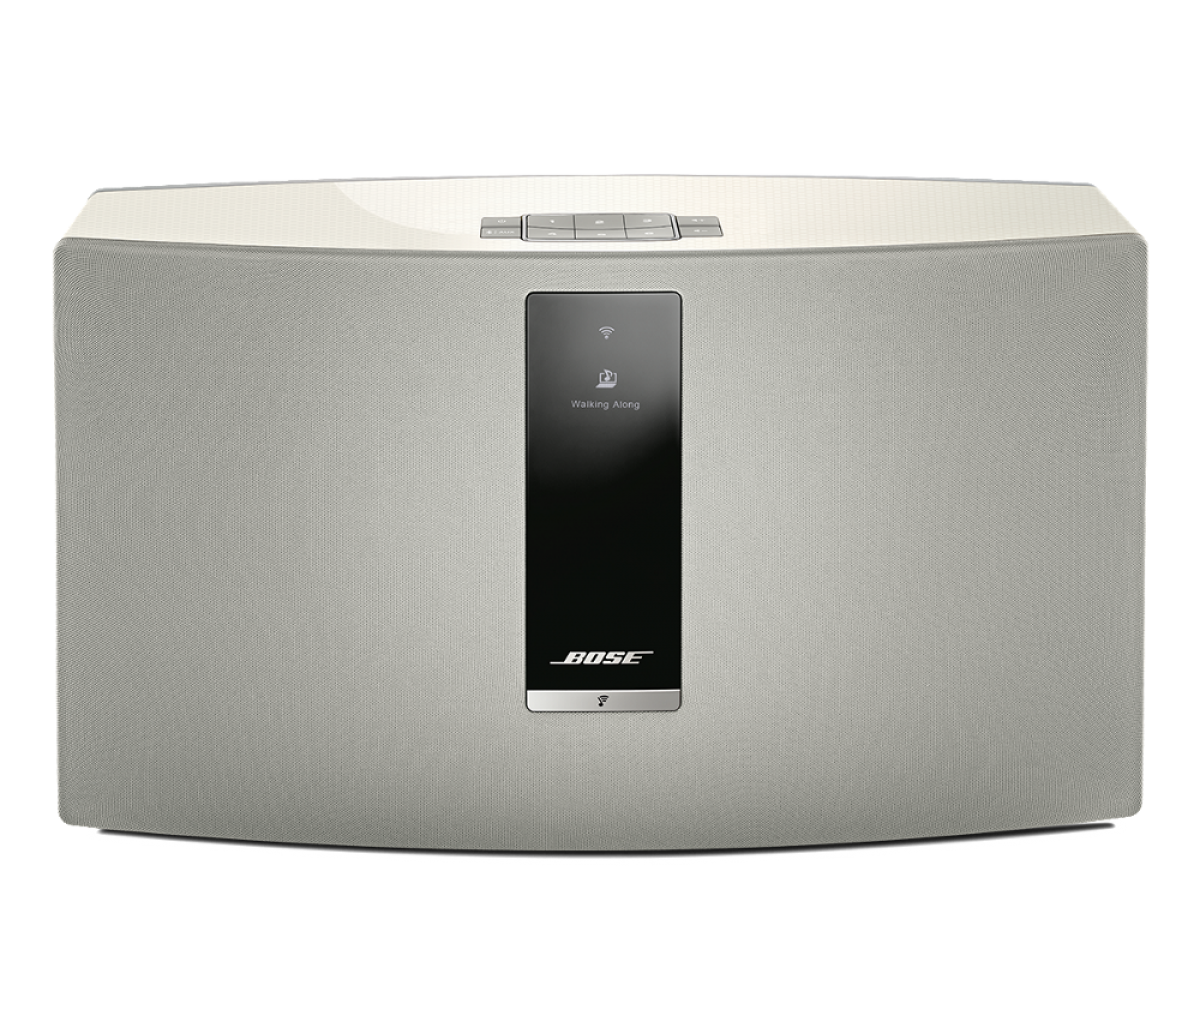 SoundTouch 30 wireless speaker